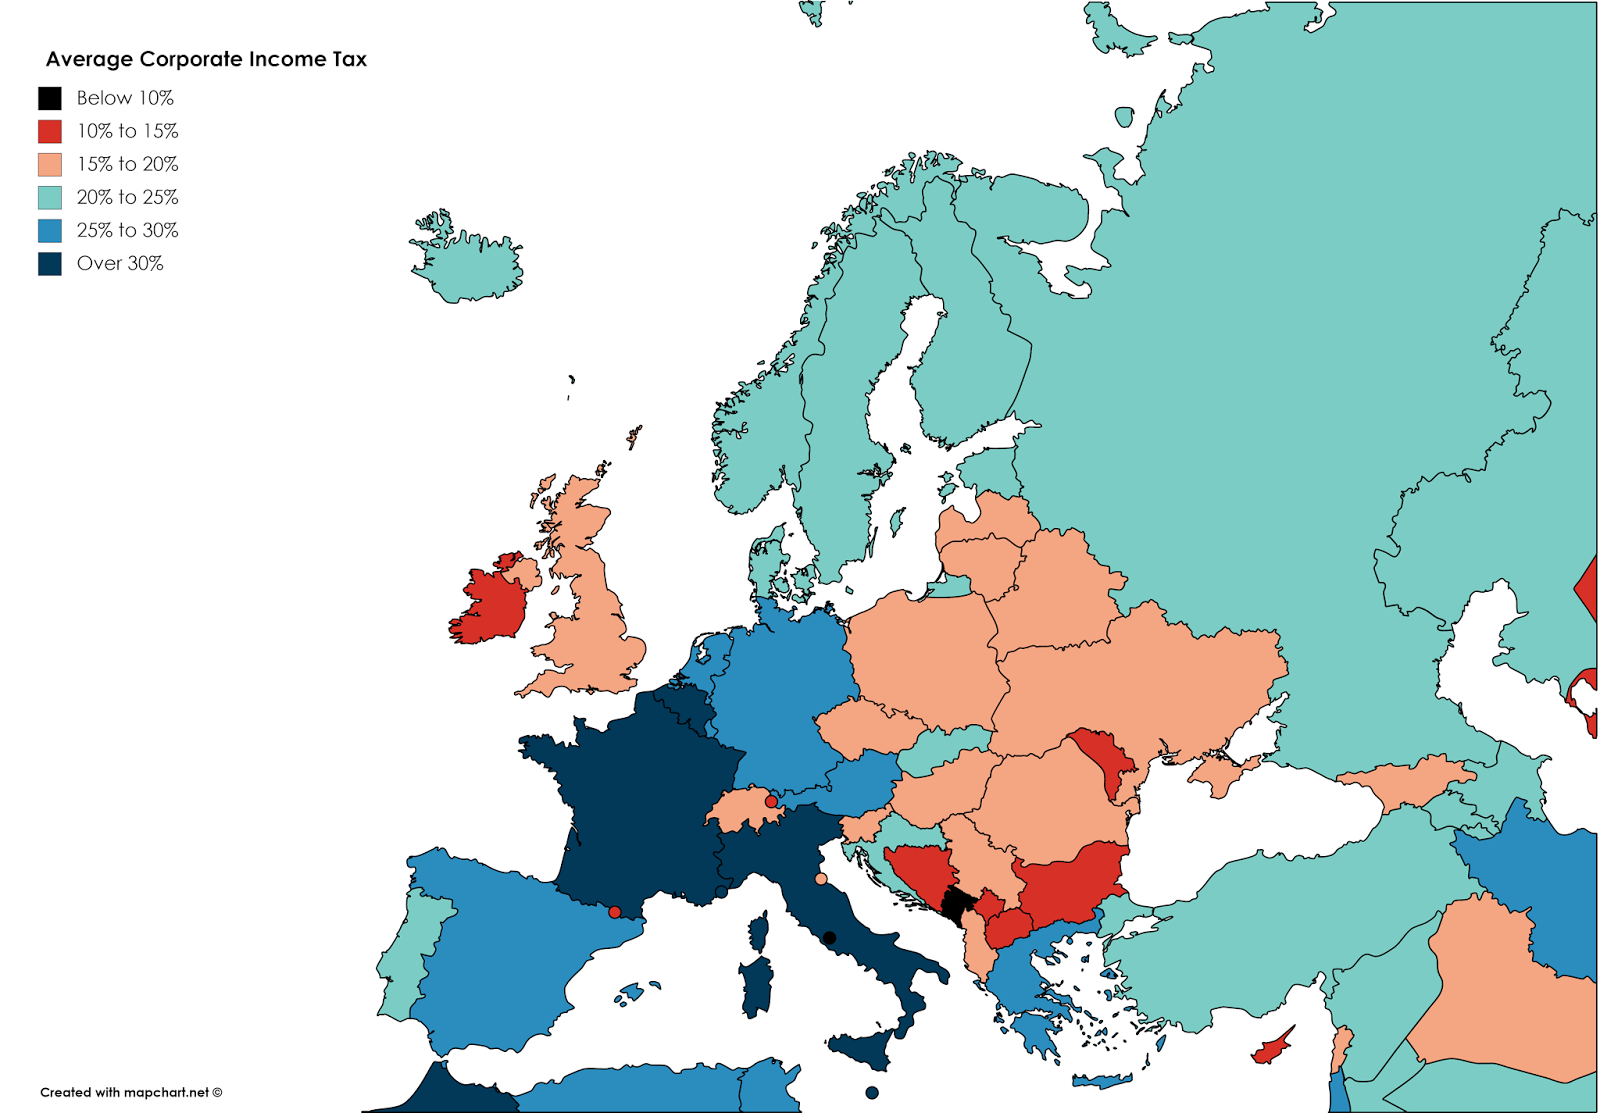 mappe, mappa europa in rosso e blu